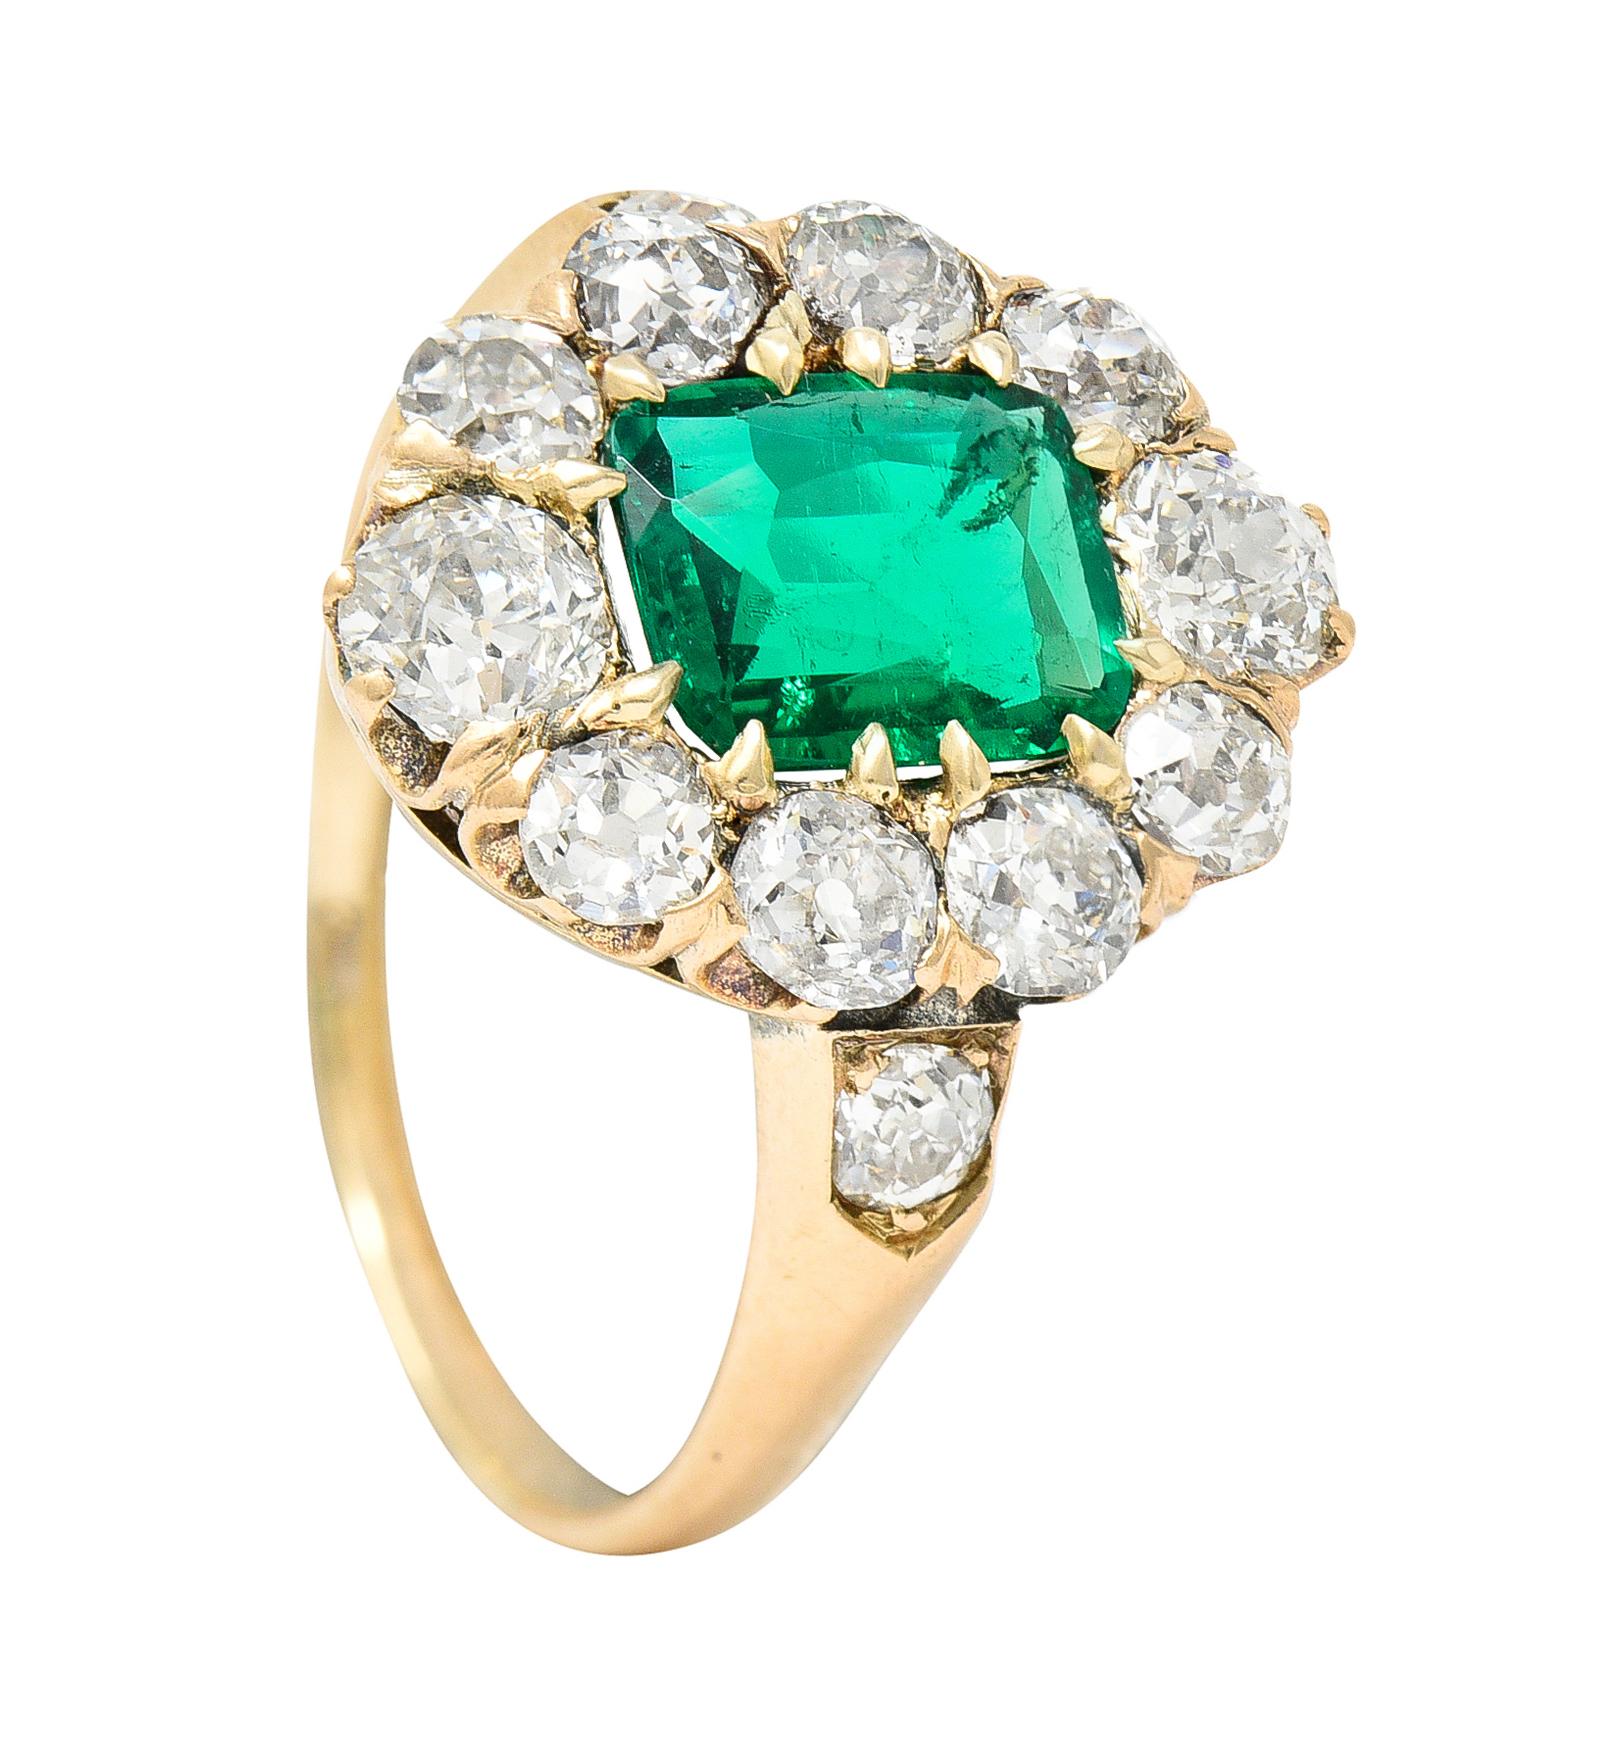 Victorian 2.71 Carat Colombian Cushion Cut Emerald Diamond 14 Karat Gold Ring For Sale 5